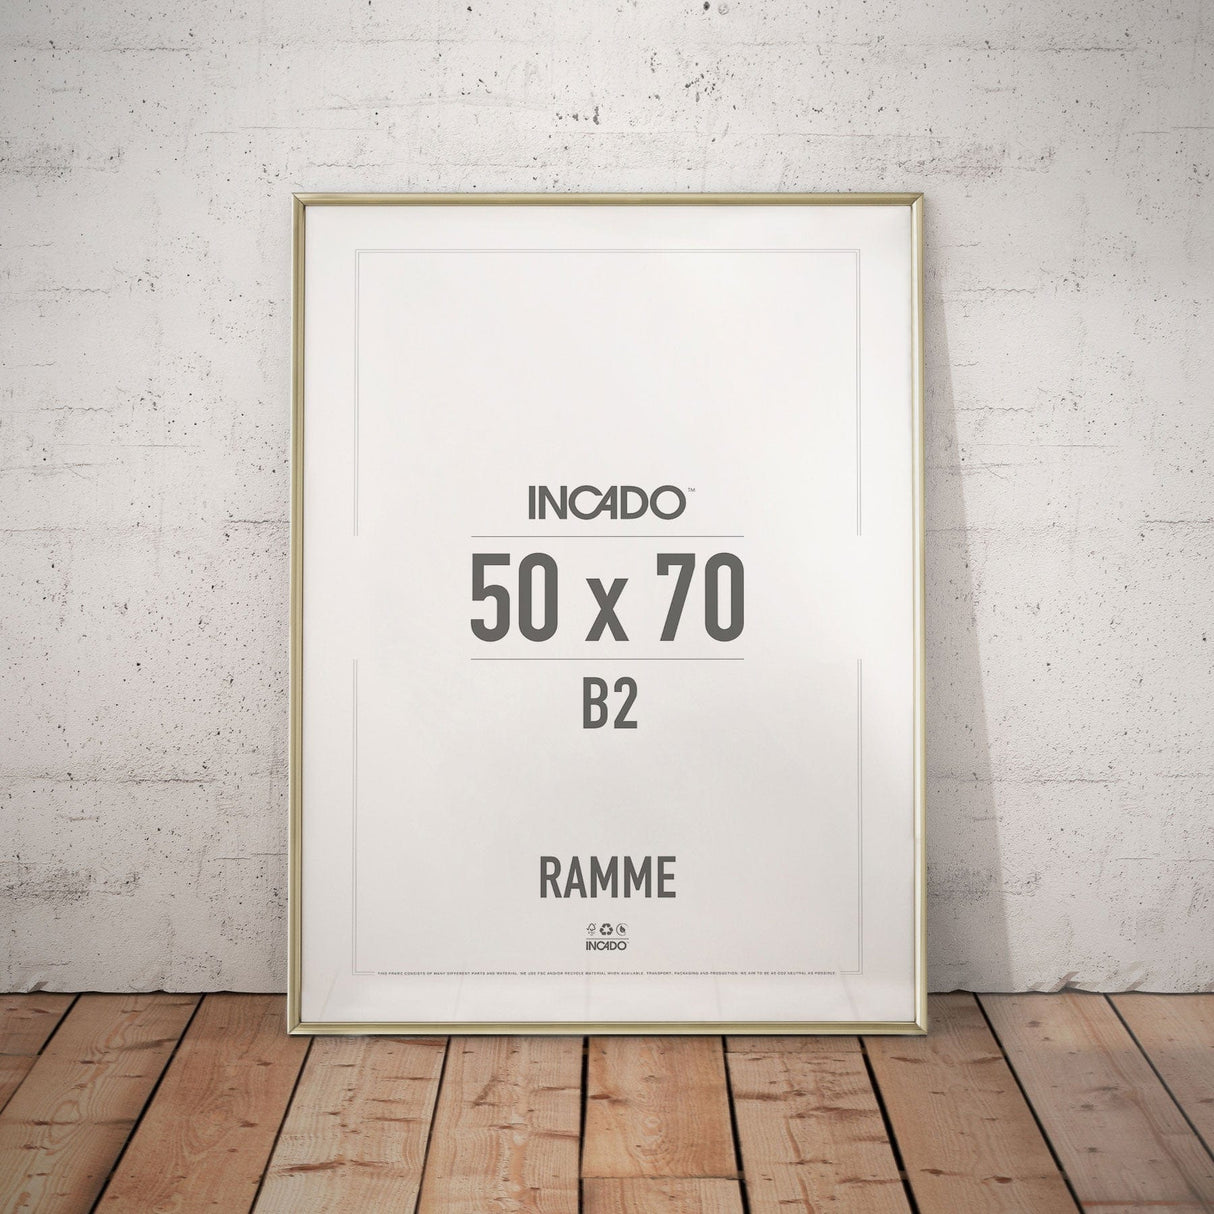 Messing aluminiumsramme - Incado NordicLine - 50 x 70 cm